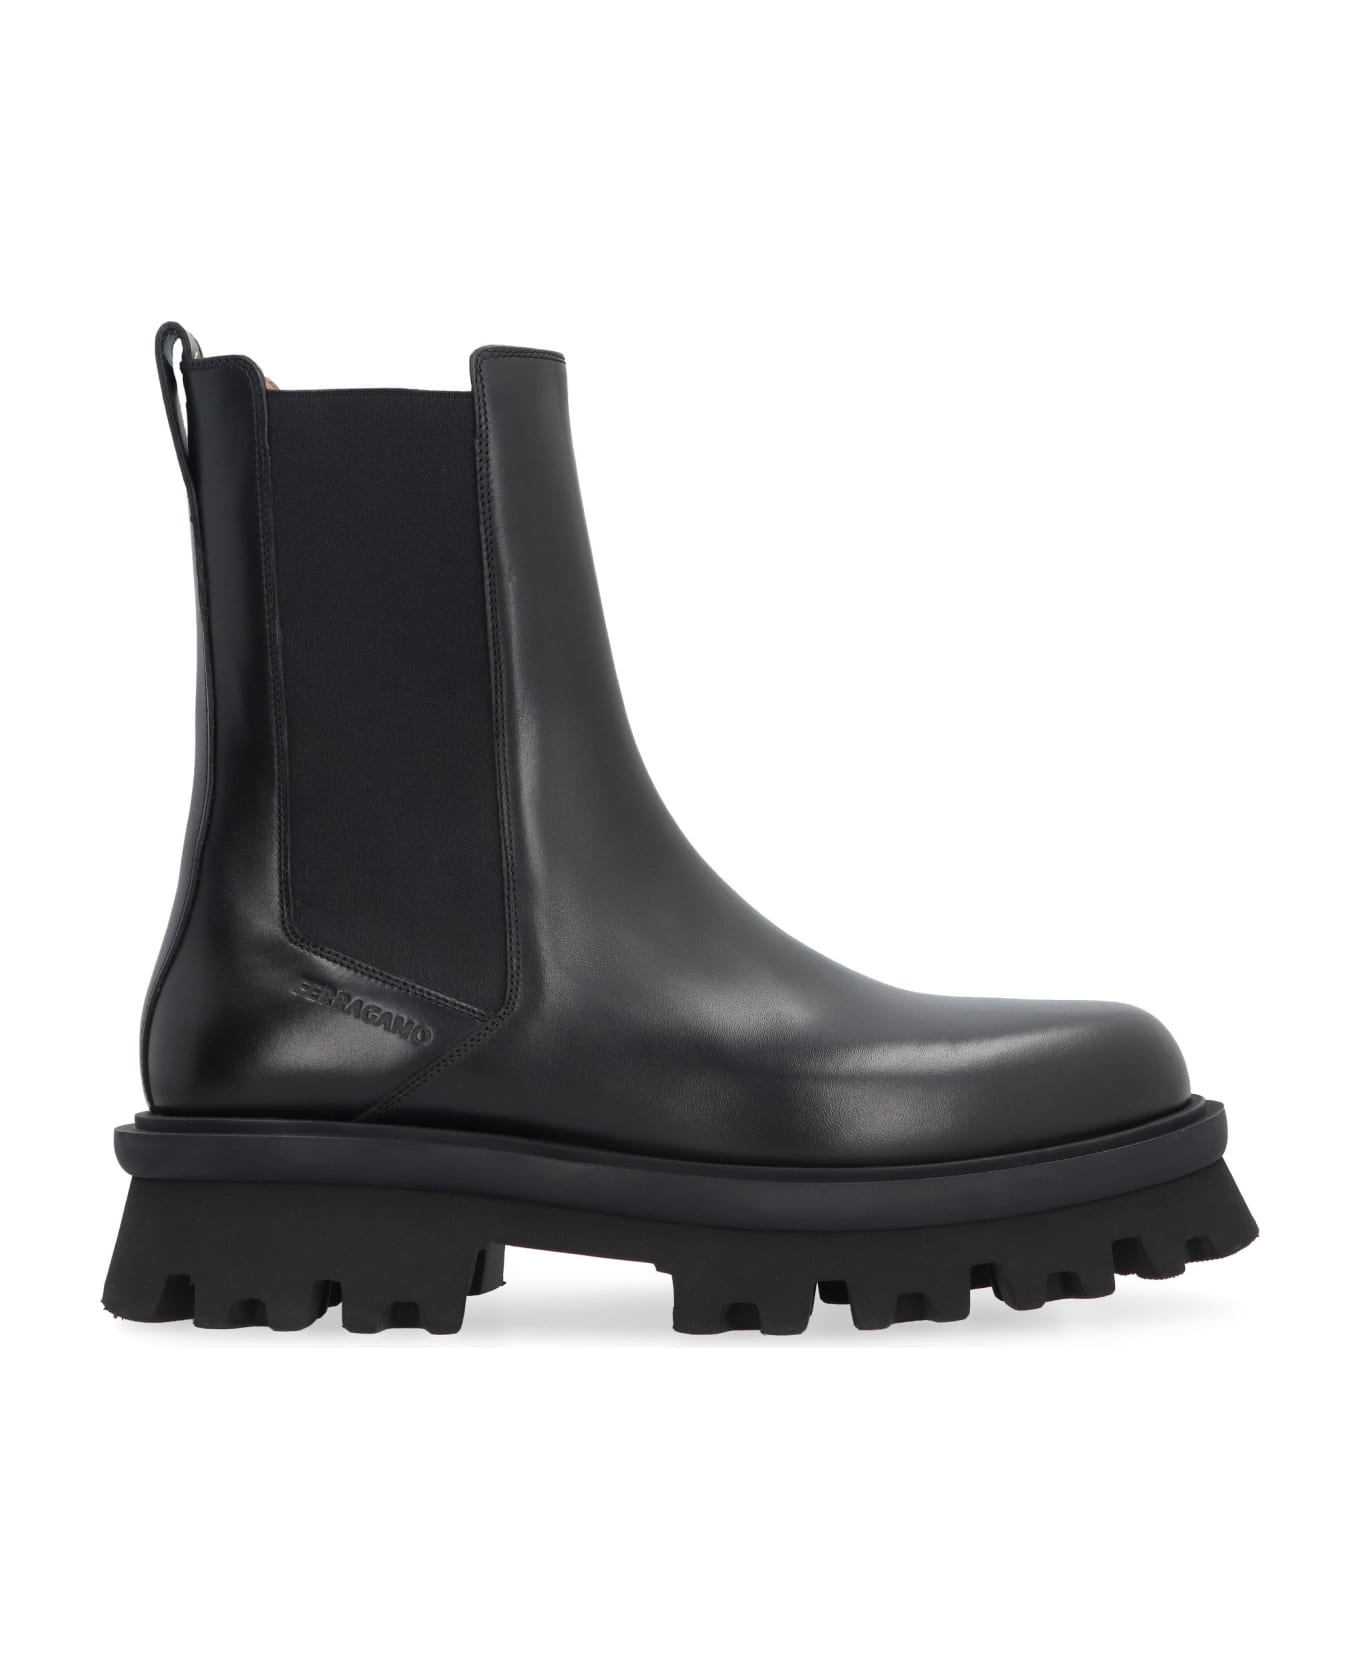 Ferragamo Leather Chelsea Boots - black ブーツ